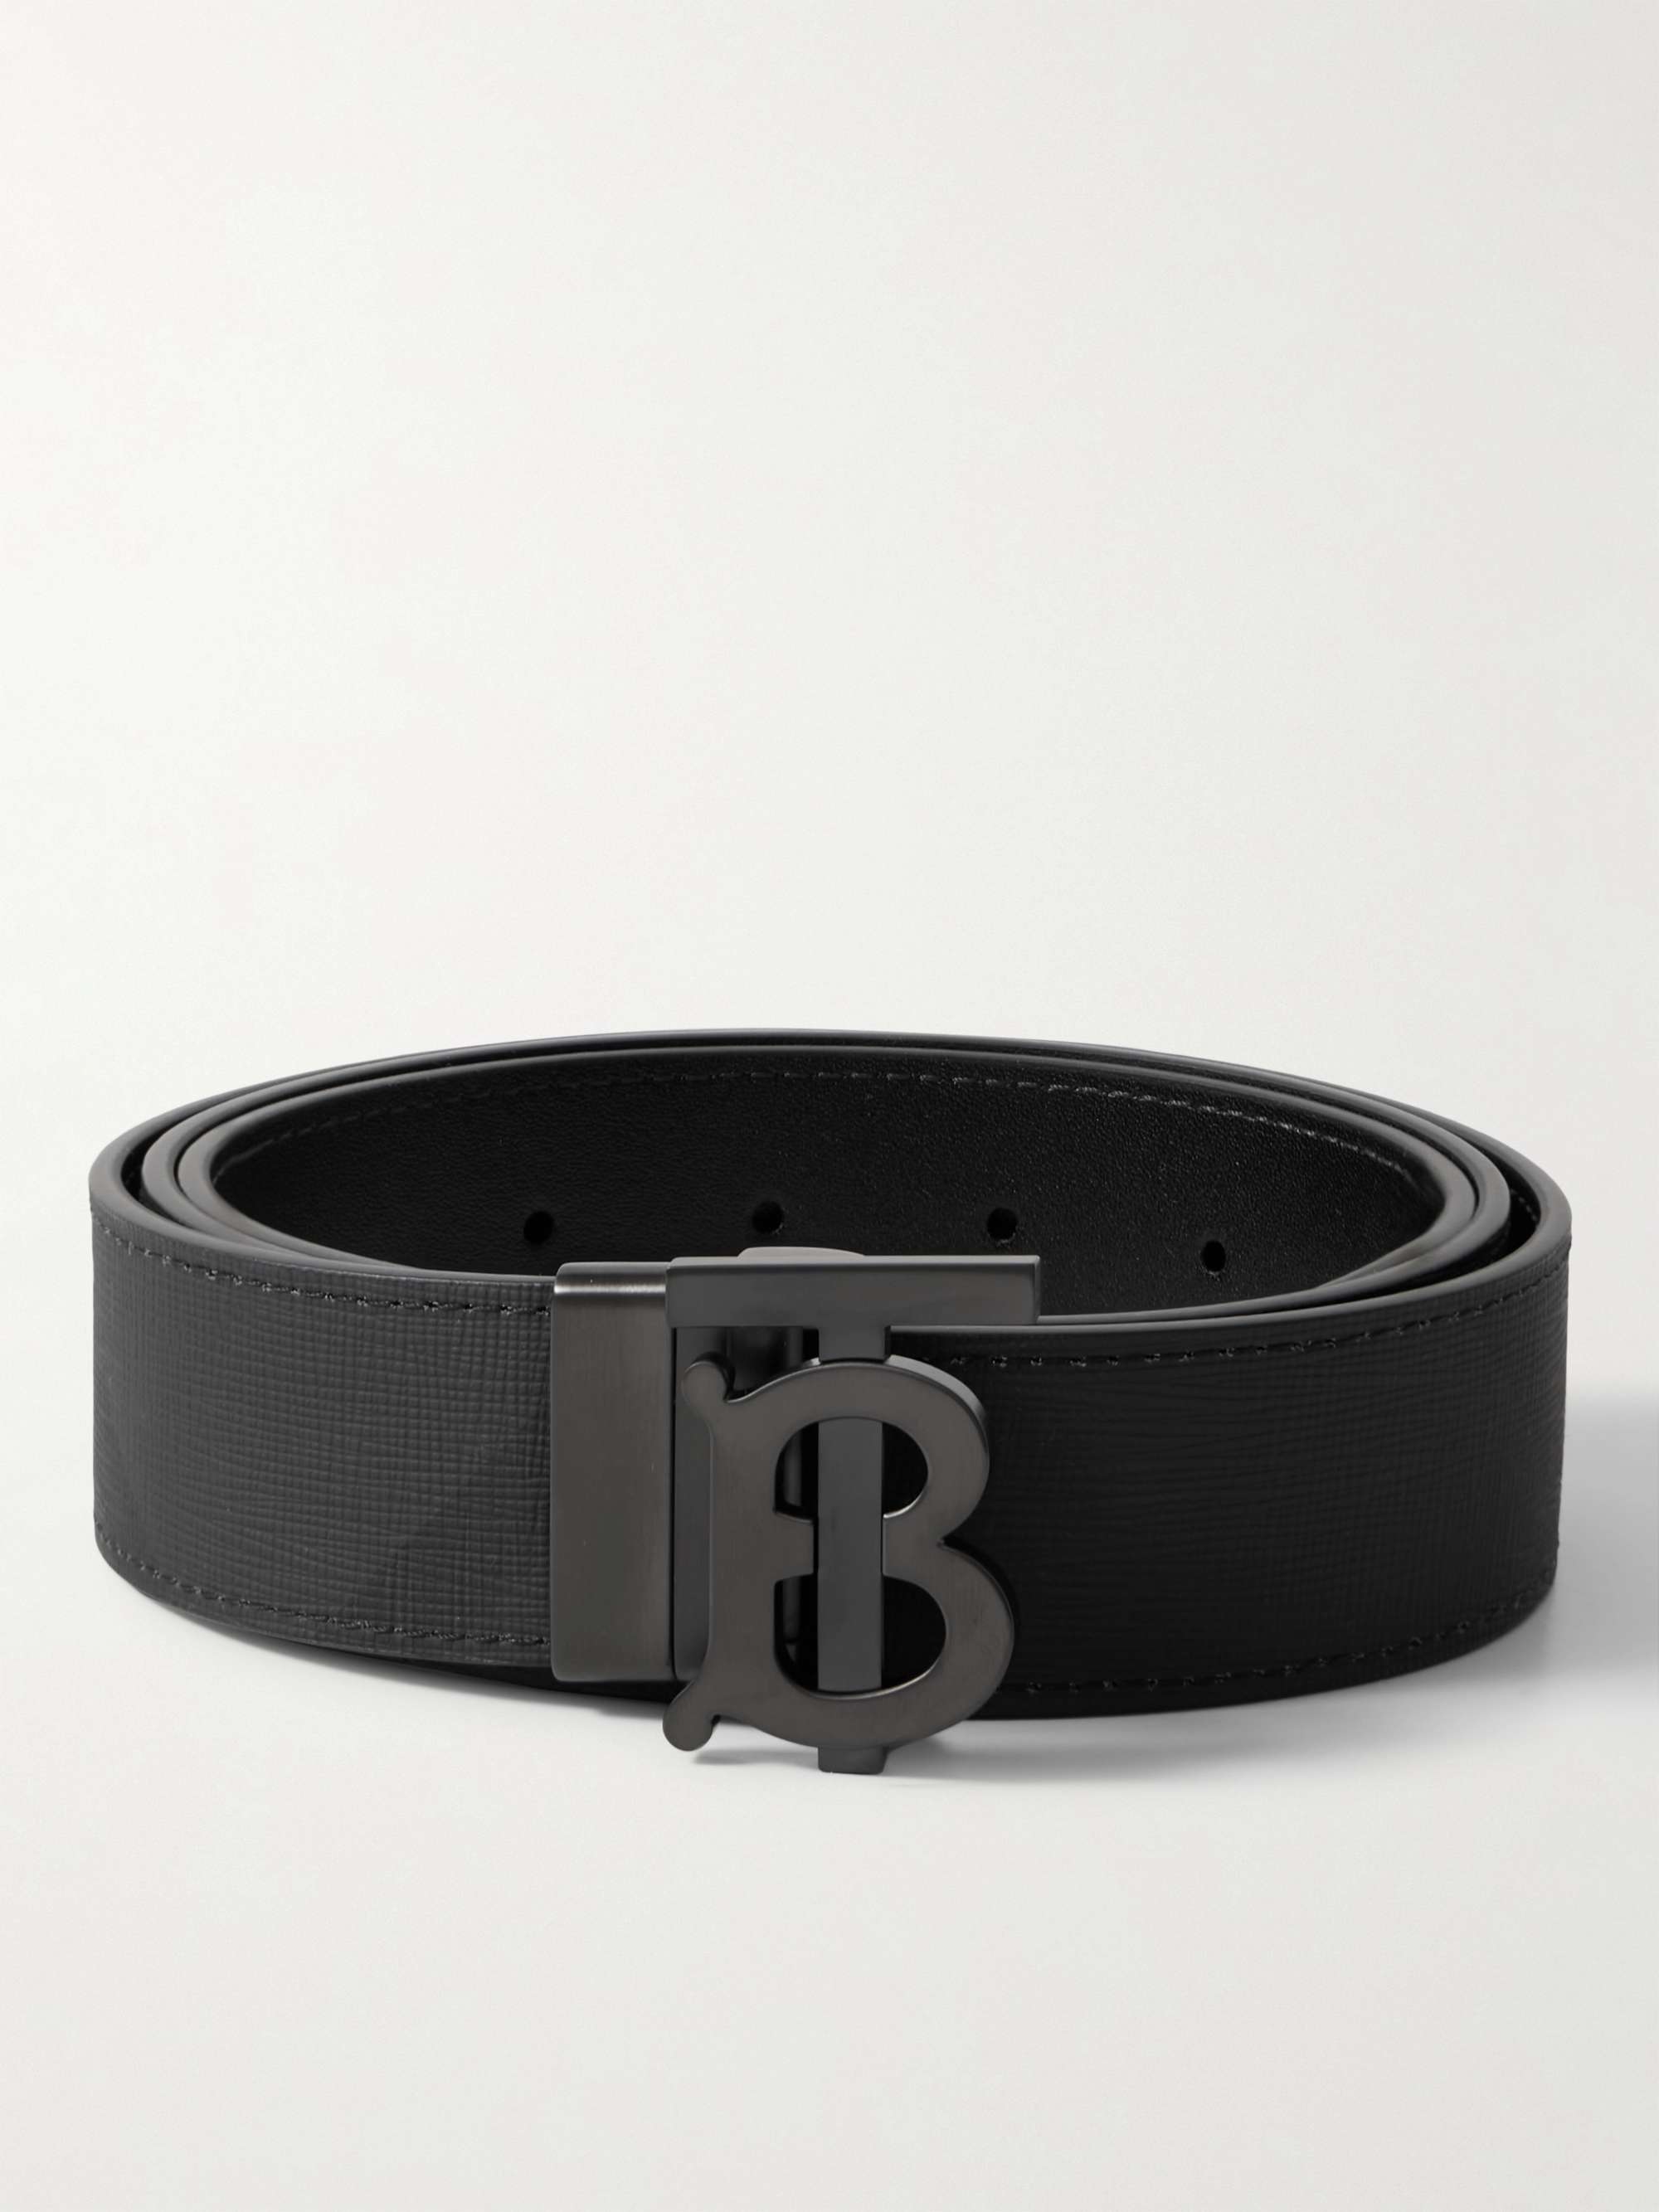 Burberry Men's TB Reversible Leather Belt